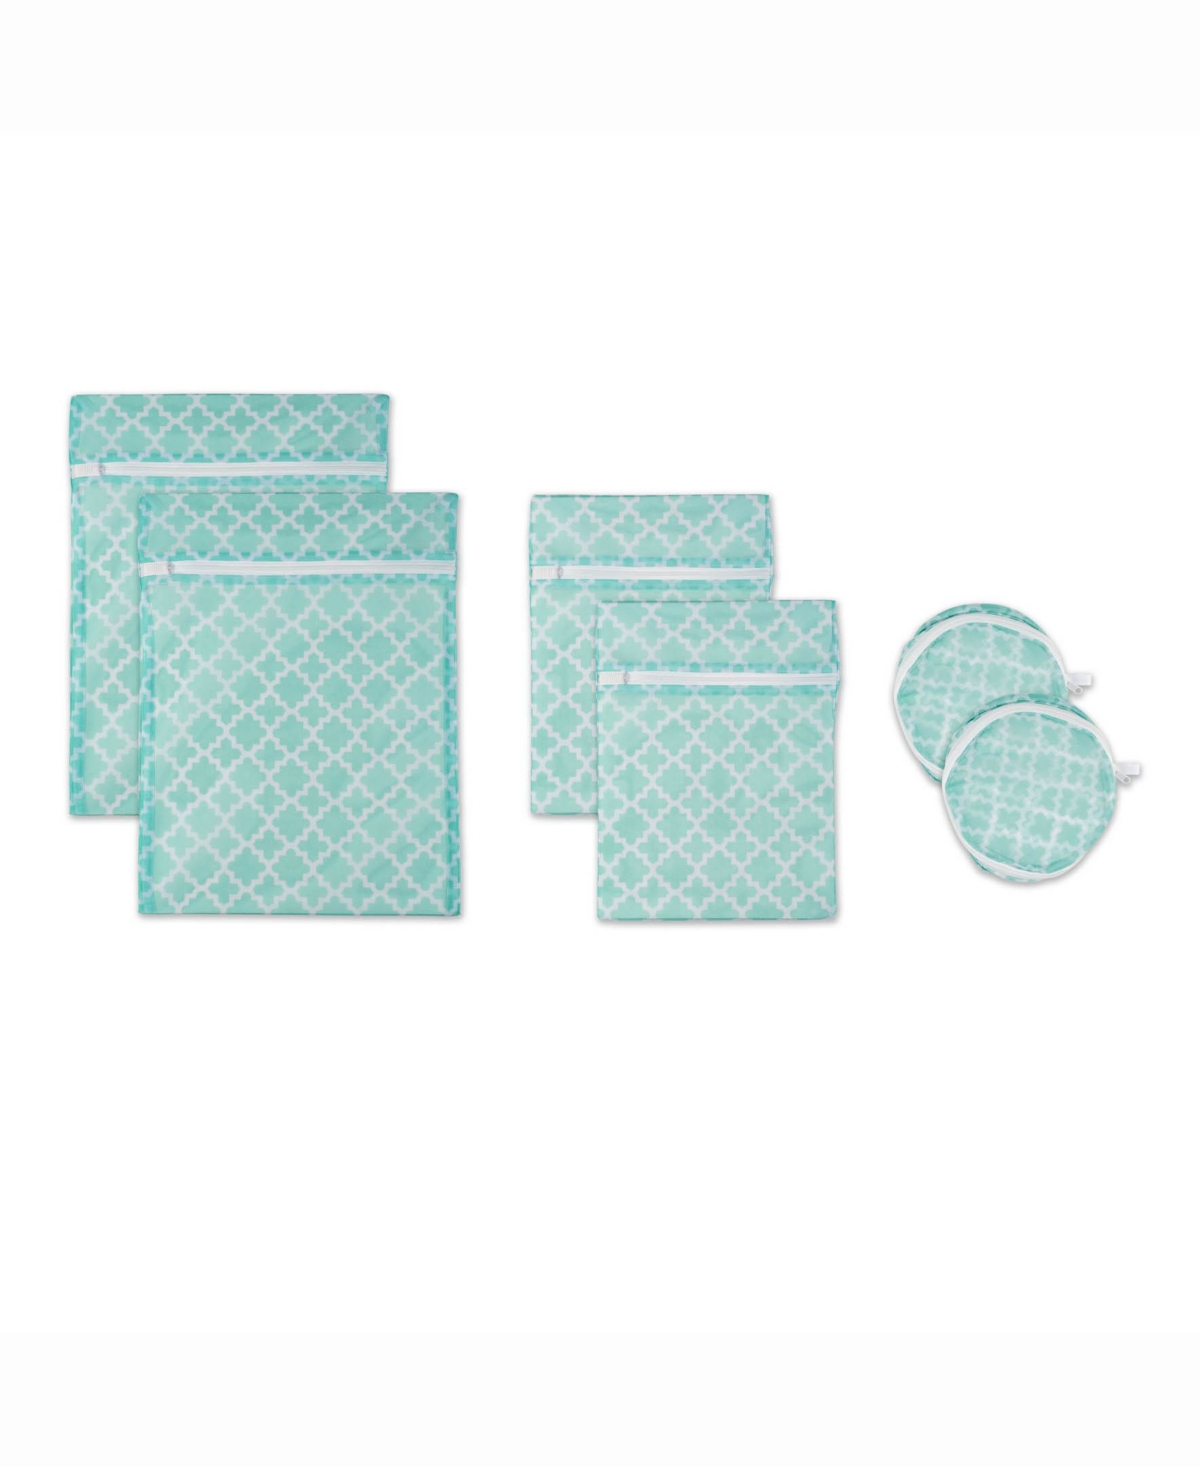 Design Import Lattice Set F Mesh Laundry Bag, Set of 6 - Turquoise